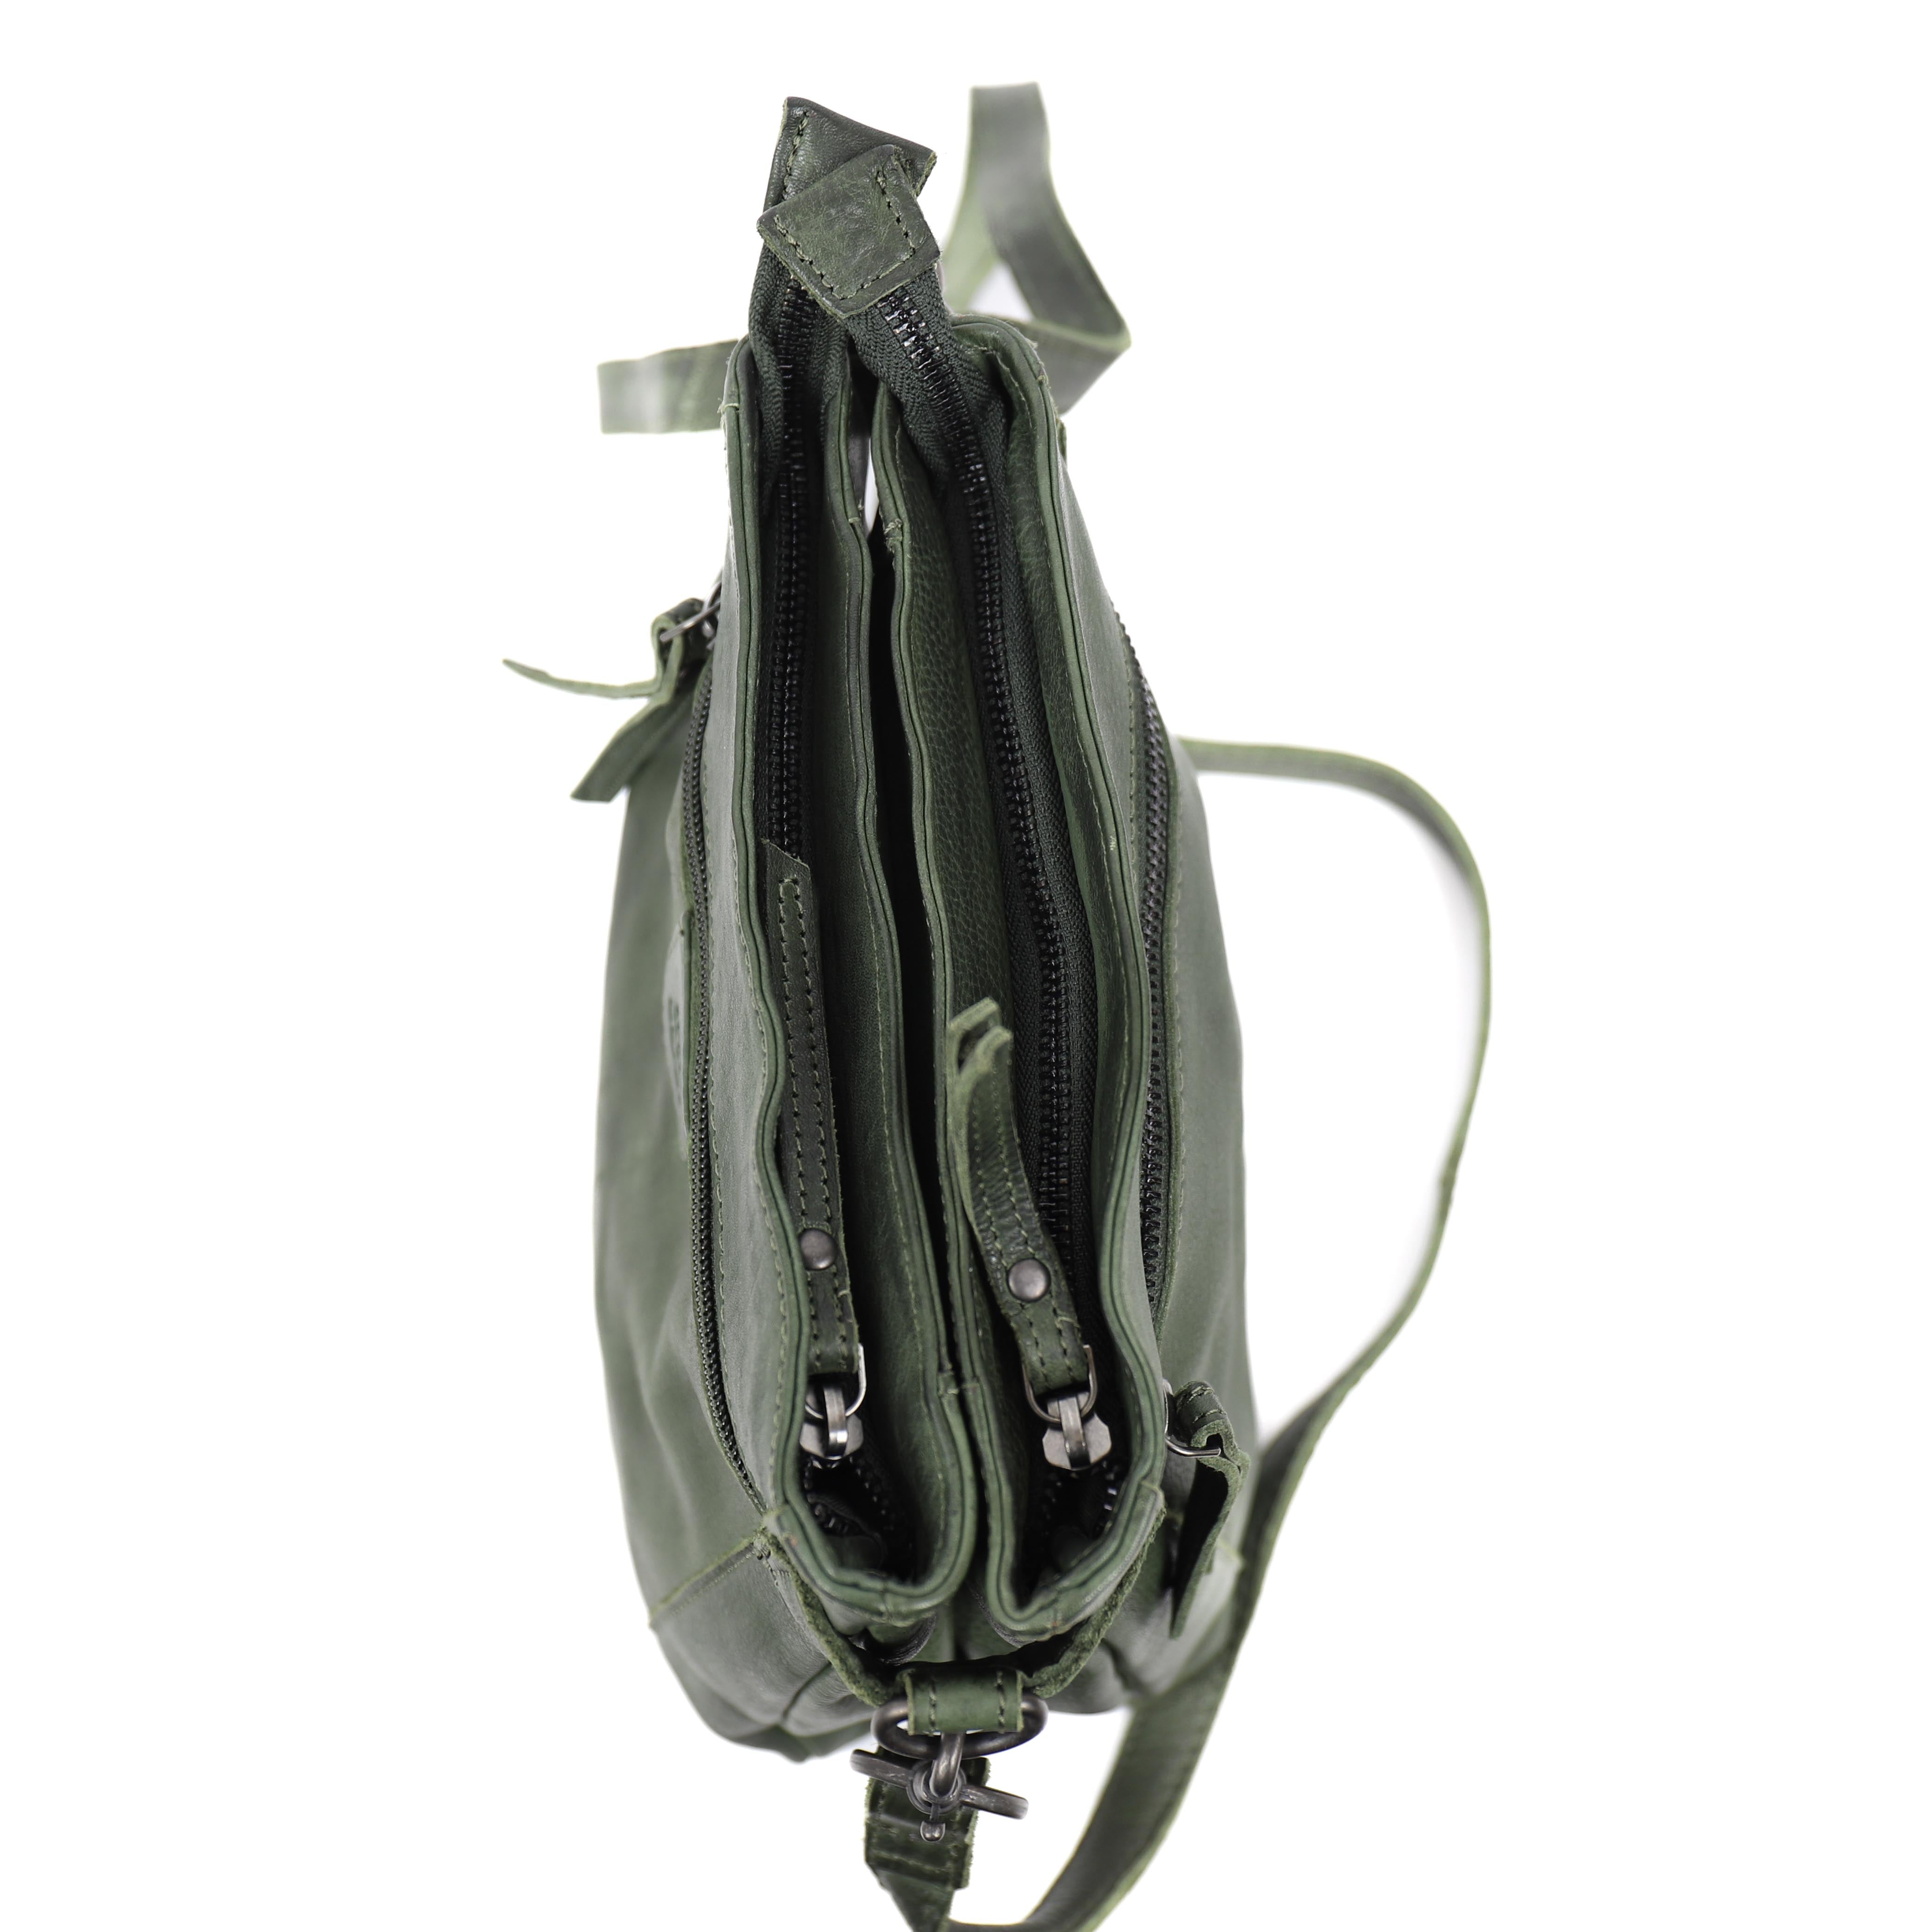 Shoulder bag 'Teppie' green - CP 2220